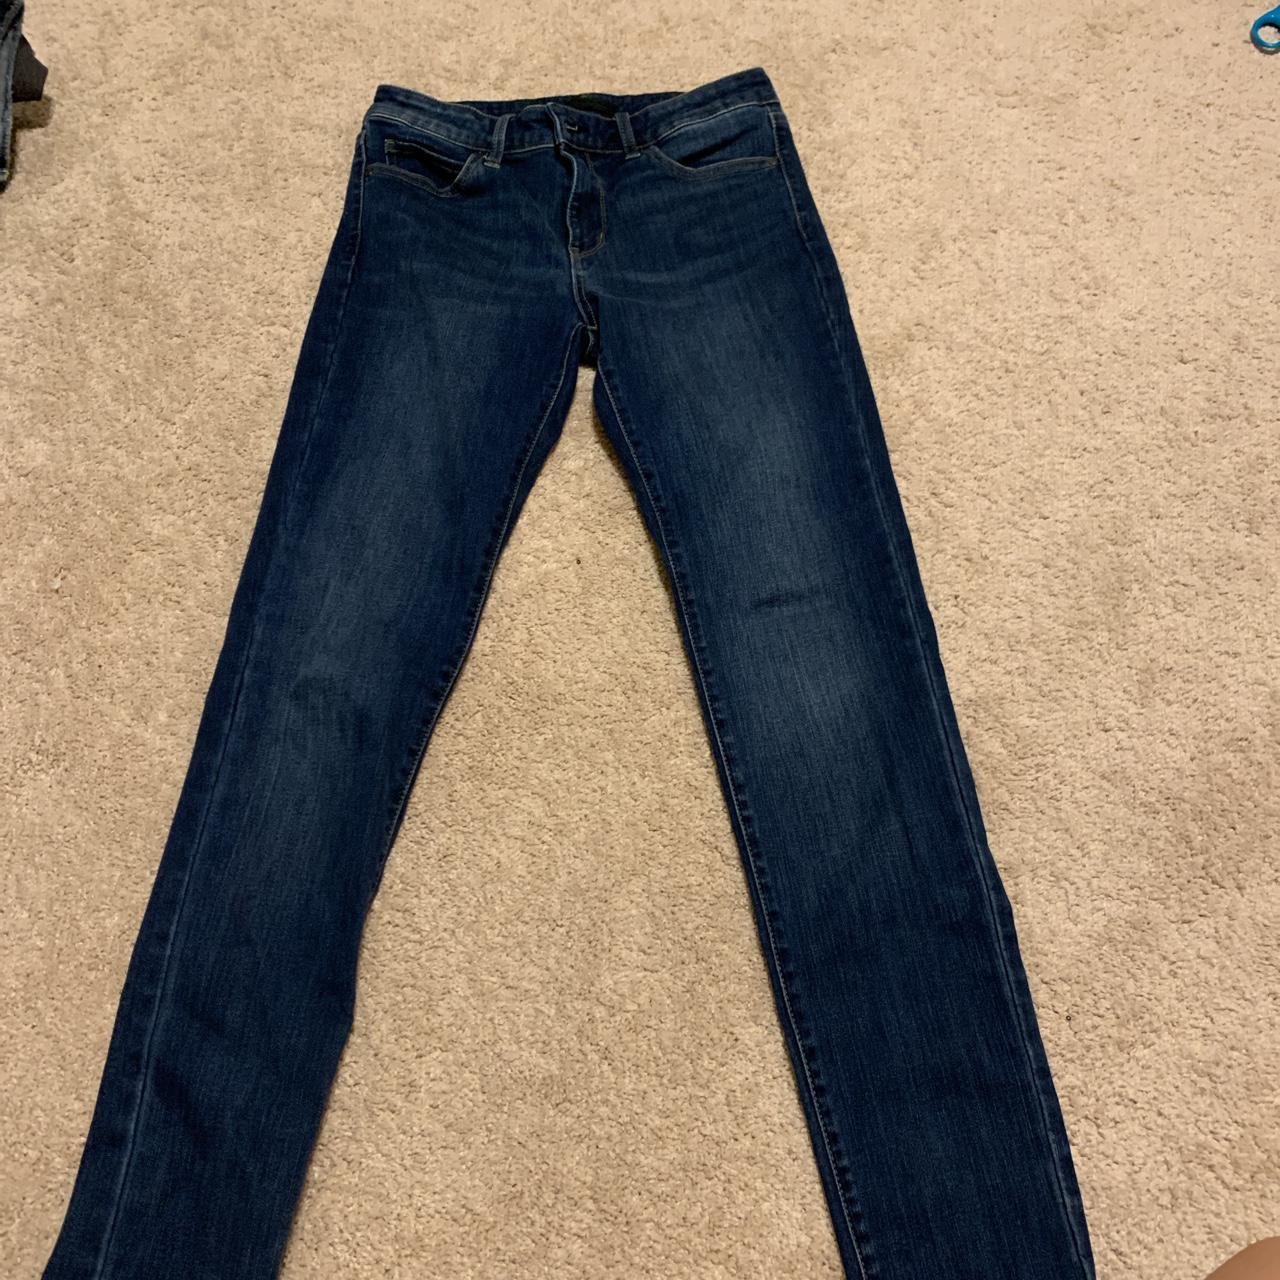 Uniqlo skinny jeans #Uniqlo #Jeans #BrandyMelville... - Depop